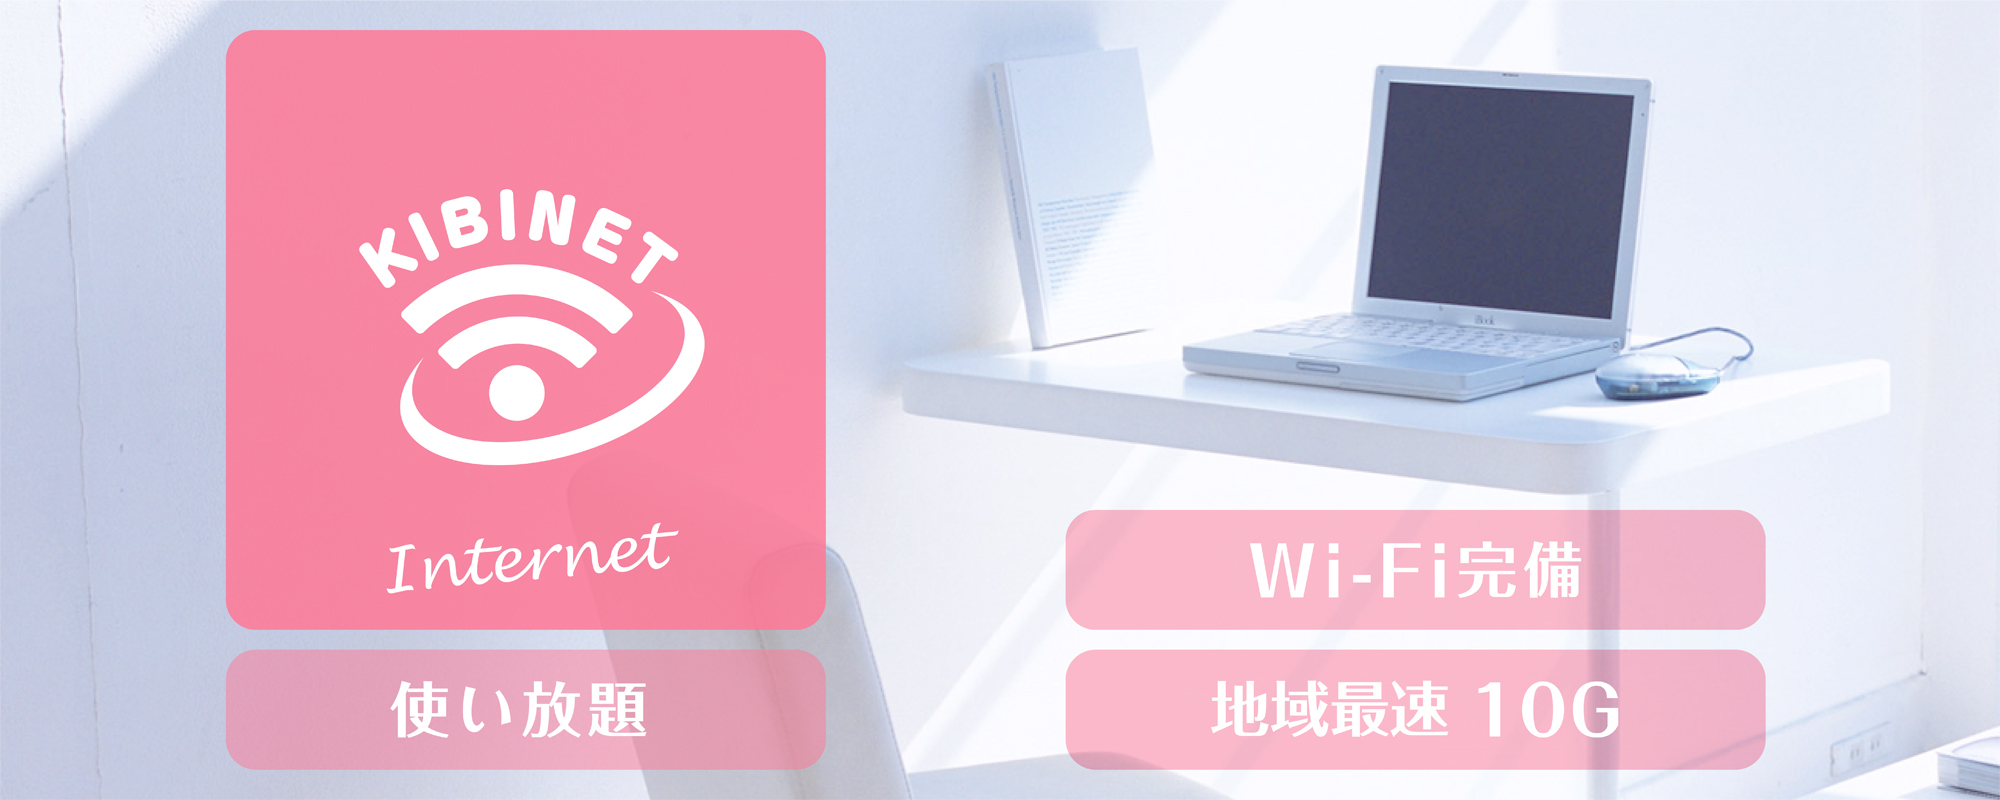 Internet Service  KIBI-Net-インターネットサービス・キビネット-｜キビテレビ